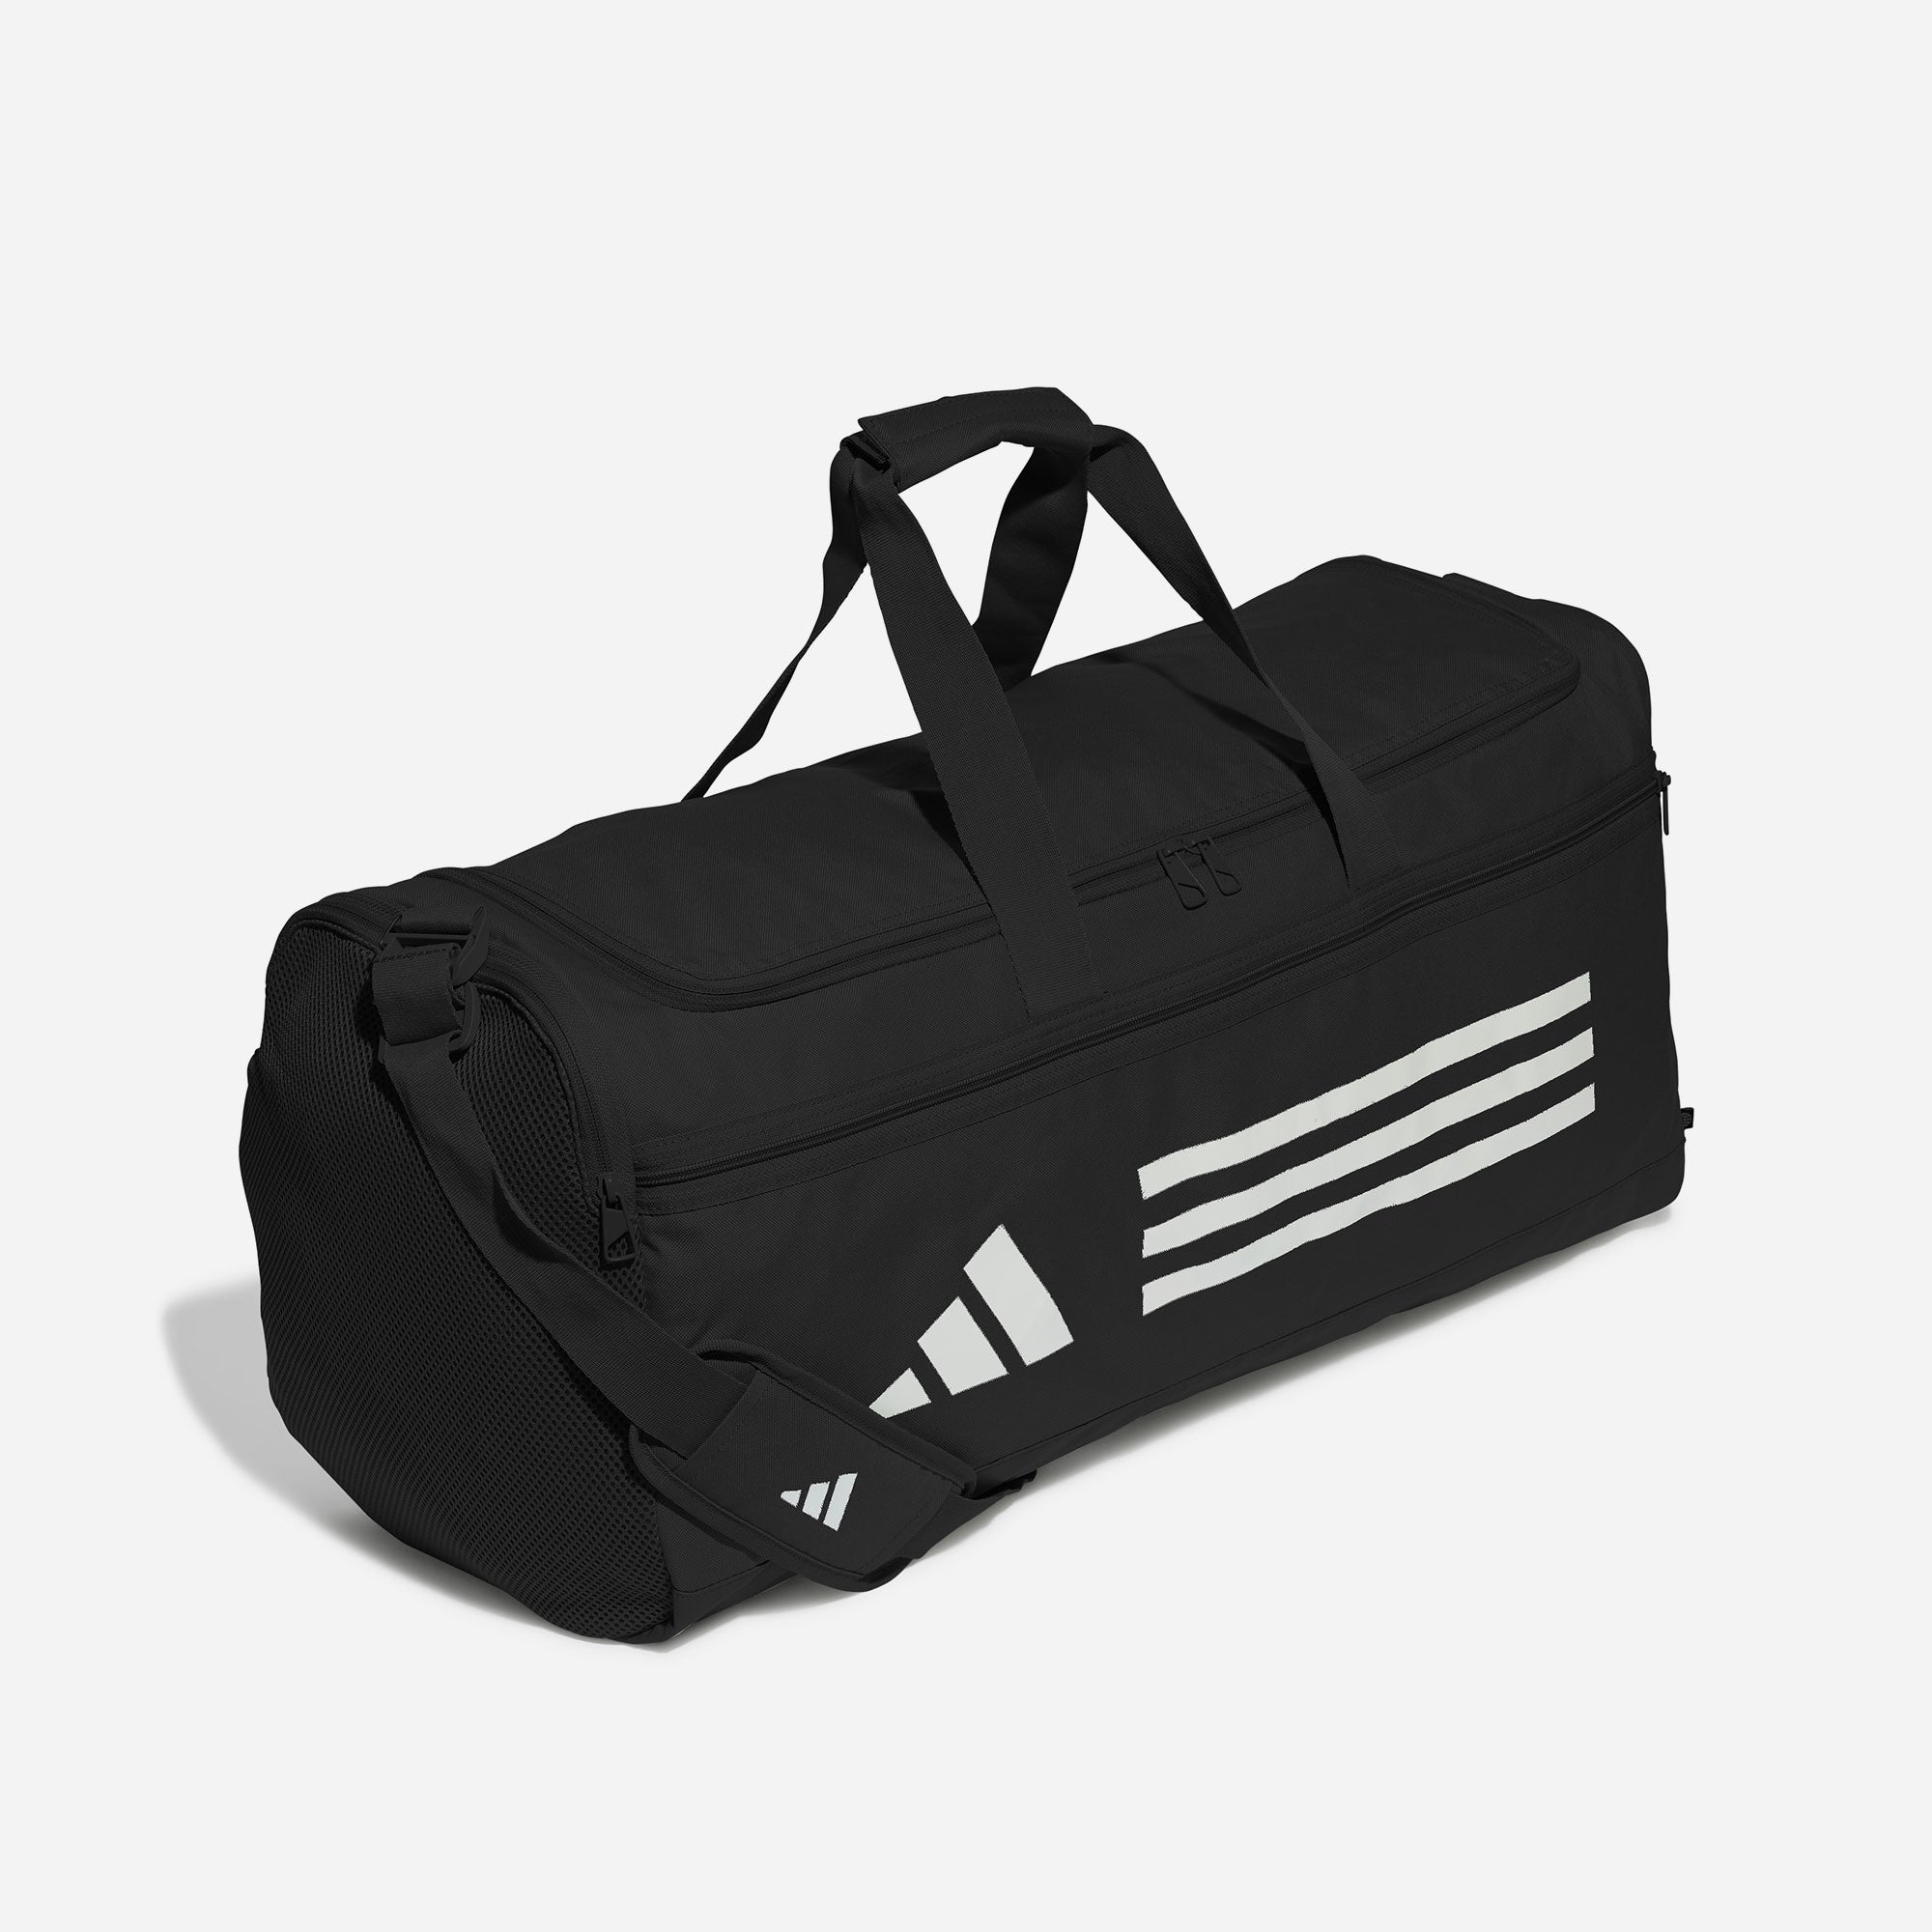 Adidas Clutch / Mini Bag w/ Wrist Strap EUC | eBay